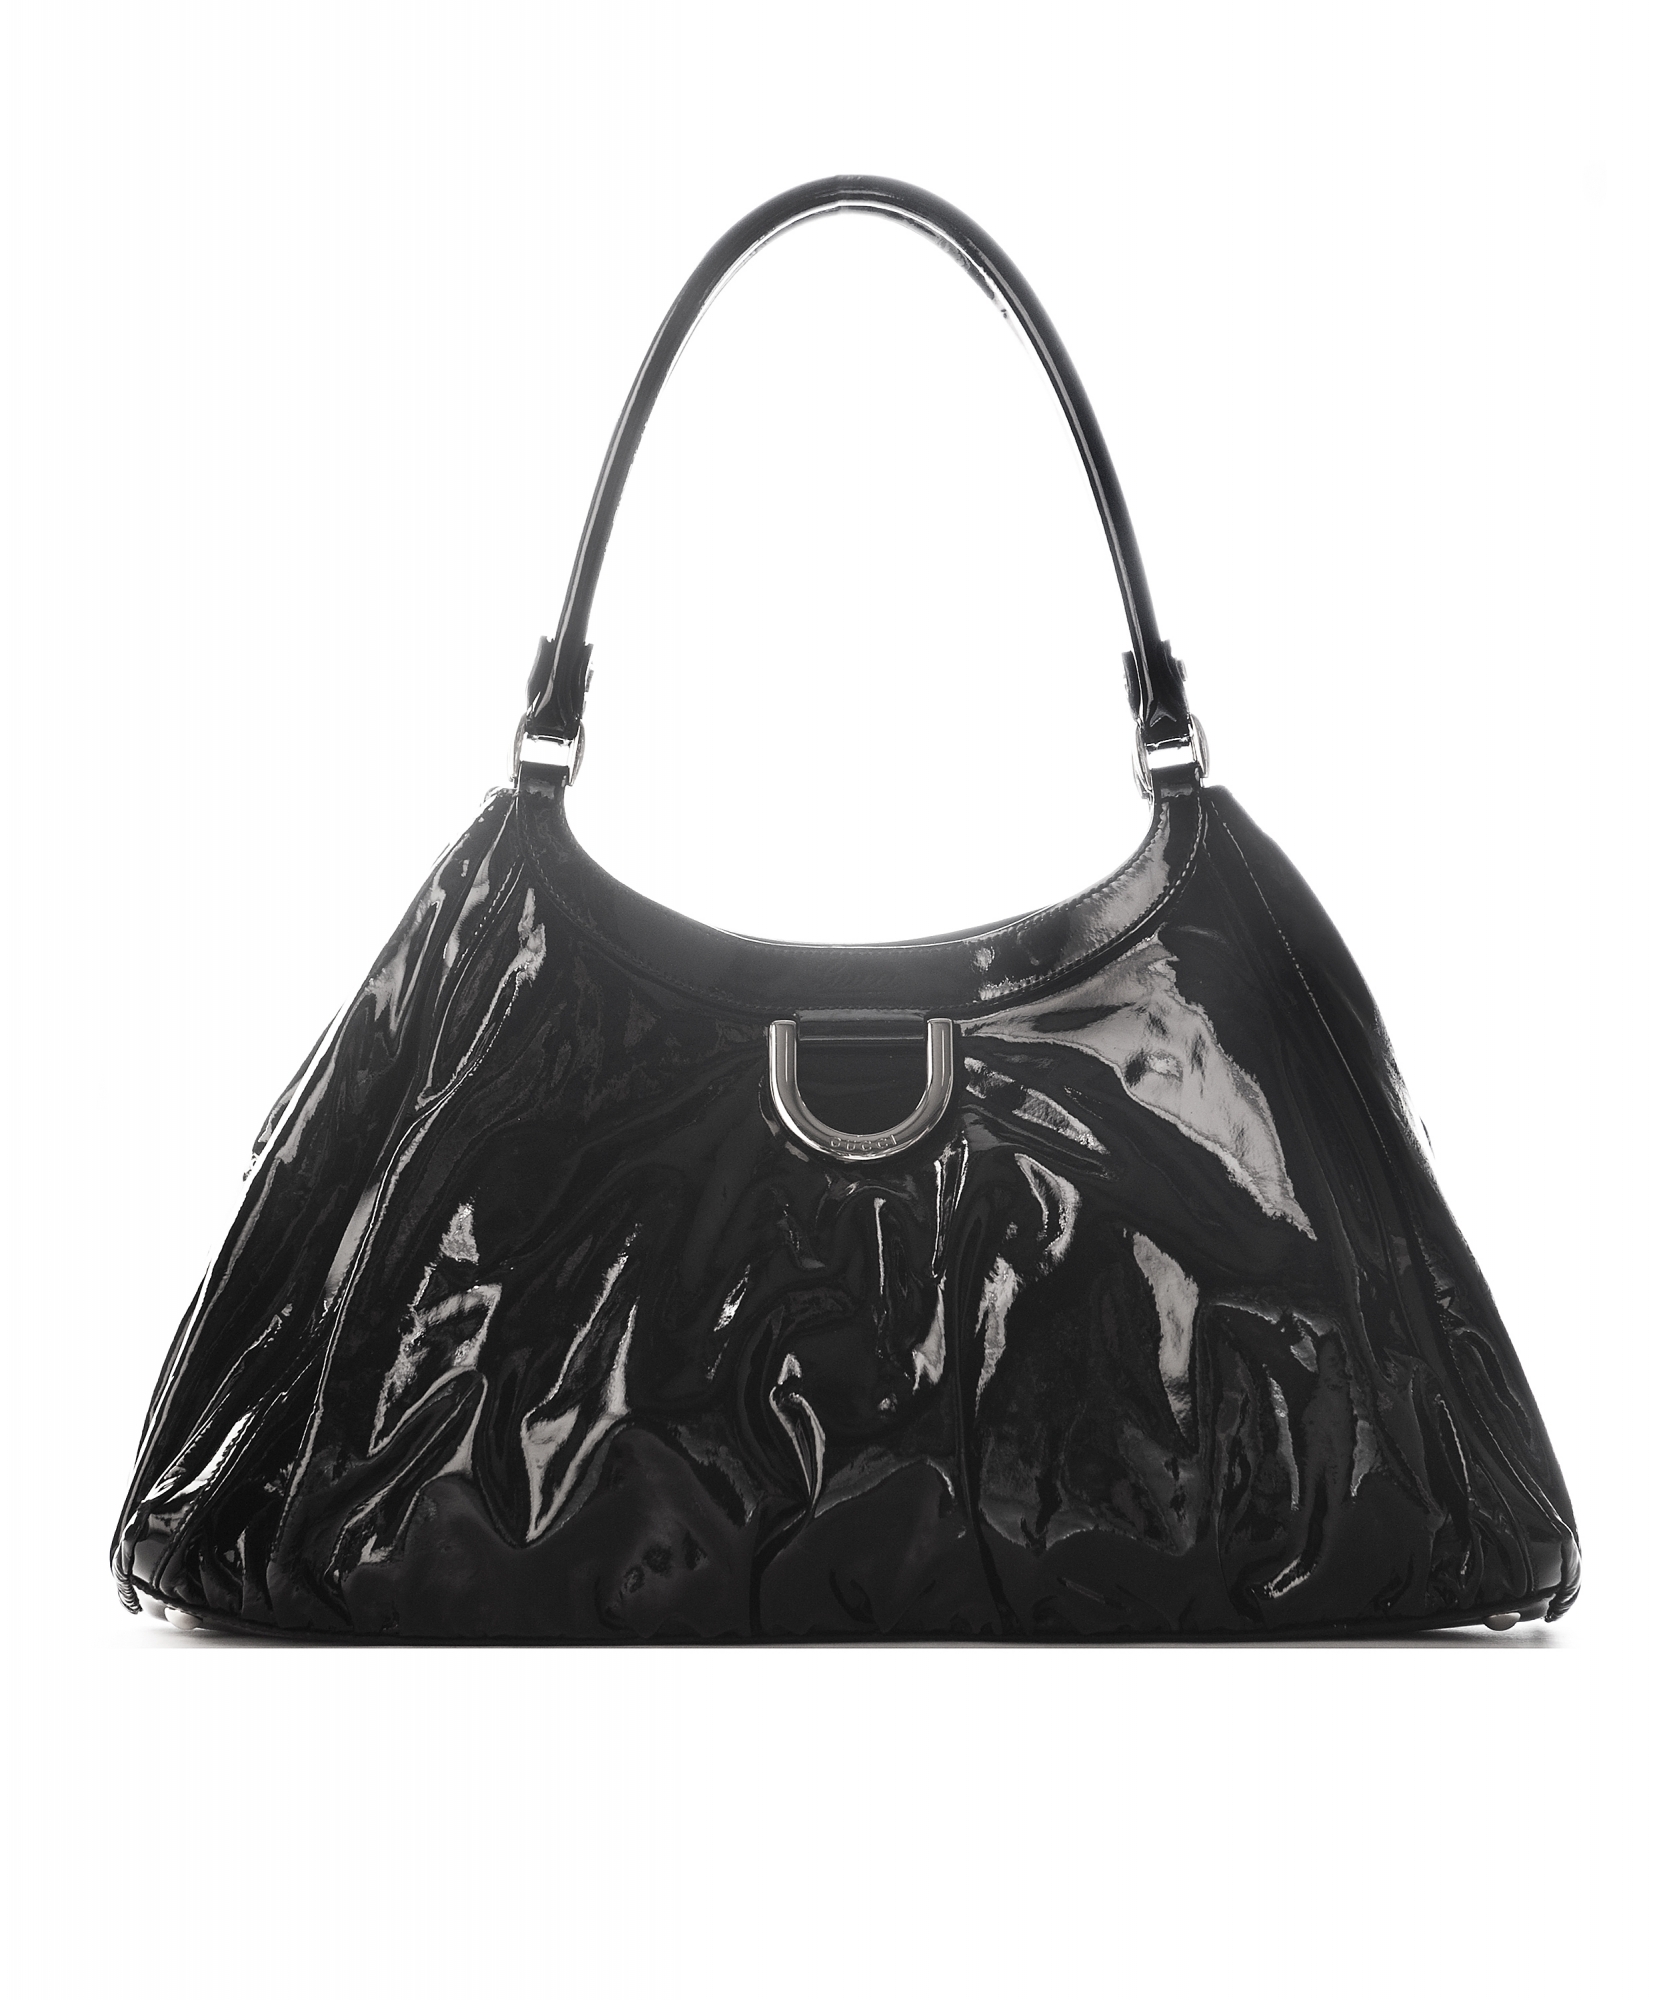 Gucci Black Patent Leather D Ring Hobo Bag | La Doyenne